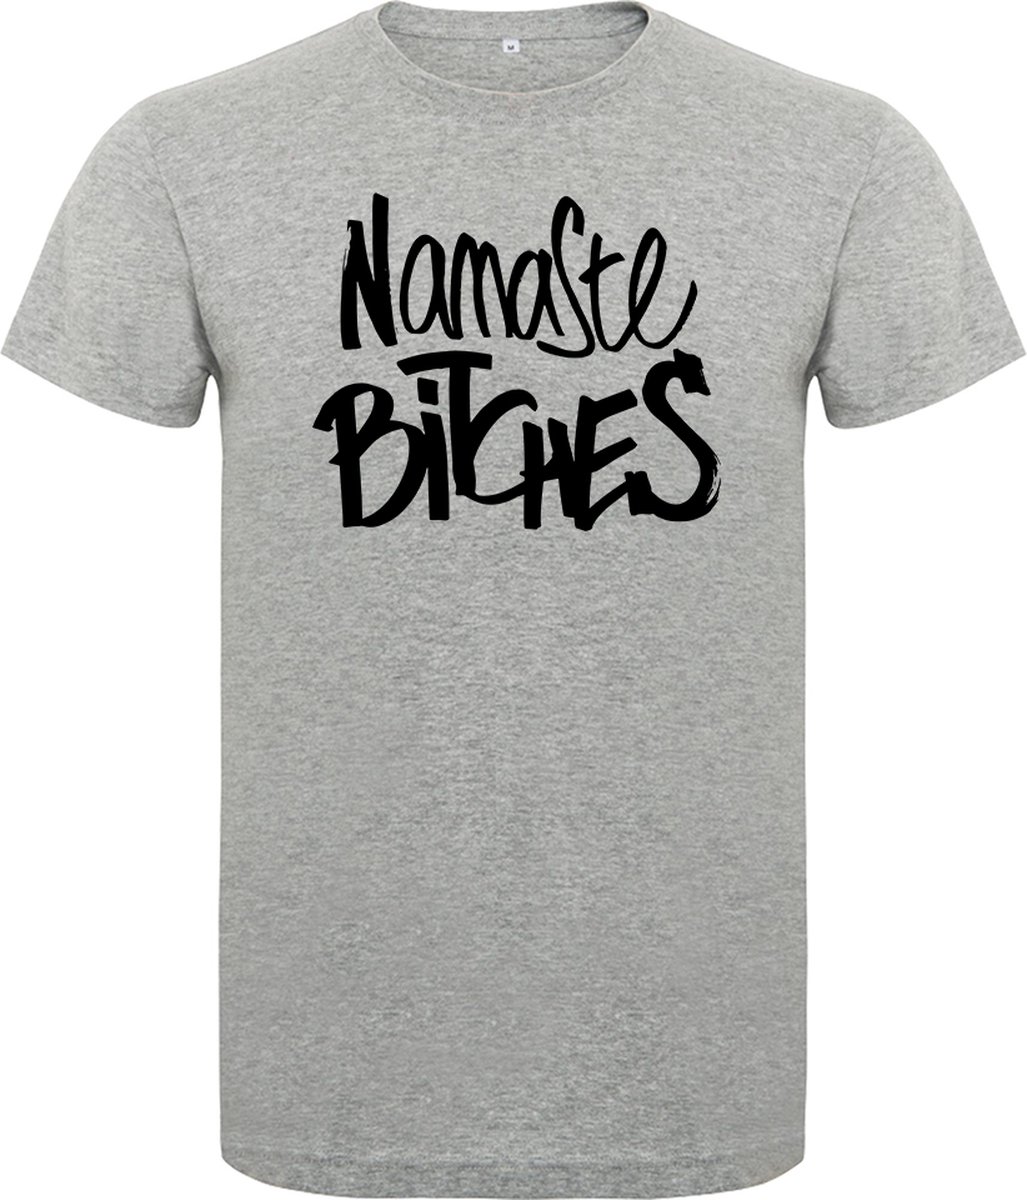 T-Shirt - Casual T-Shirt - Fun T-Shirt - Fun Tekst - Lifestyle T-Shirt - Grappig - Mood - Sport - Yoga - Relax - Vibe - Namaste Bitches - Maat XL